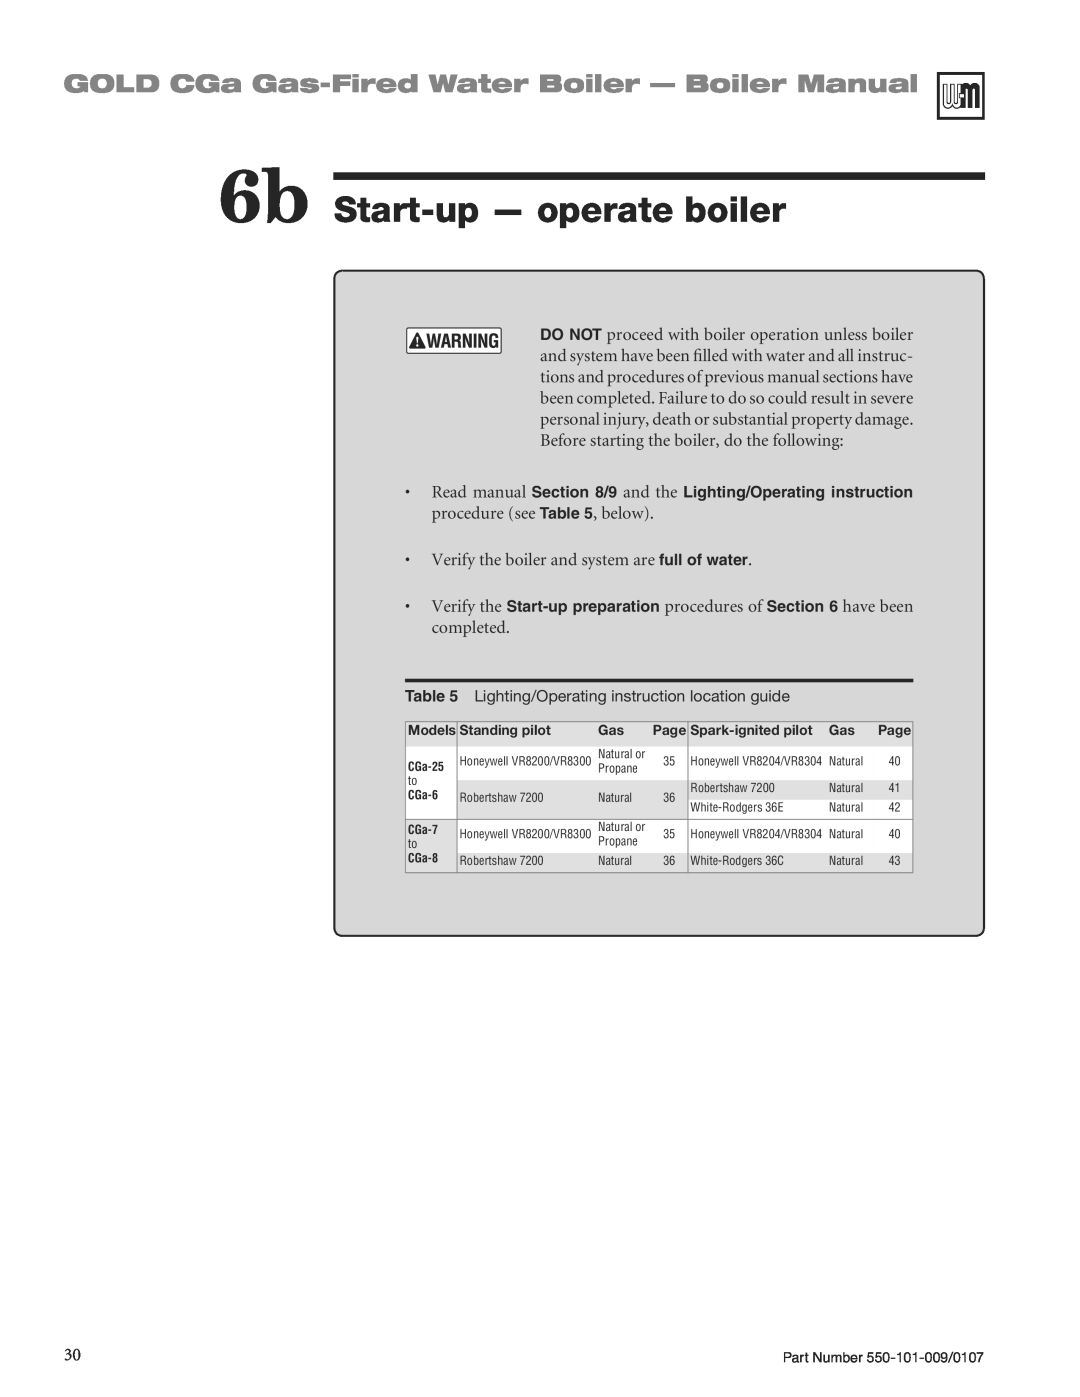 Weil-McLain CGA25SPDN manual 6b Start-up- operate boiler, GOLD CGa Gas-FiredWater Boiler - Boiler Manual 